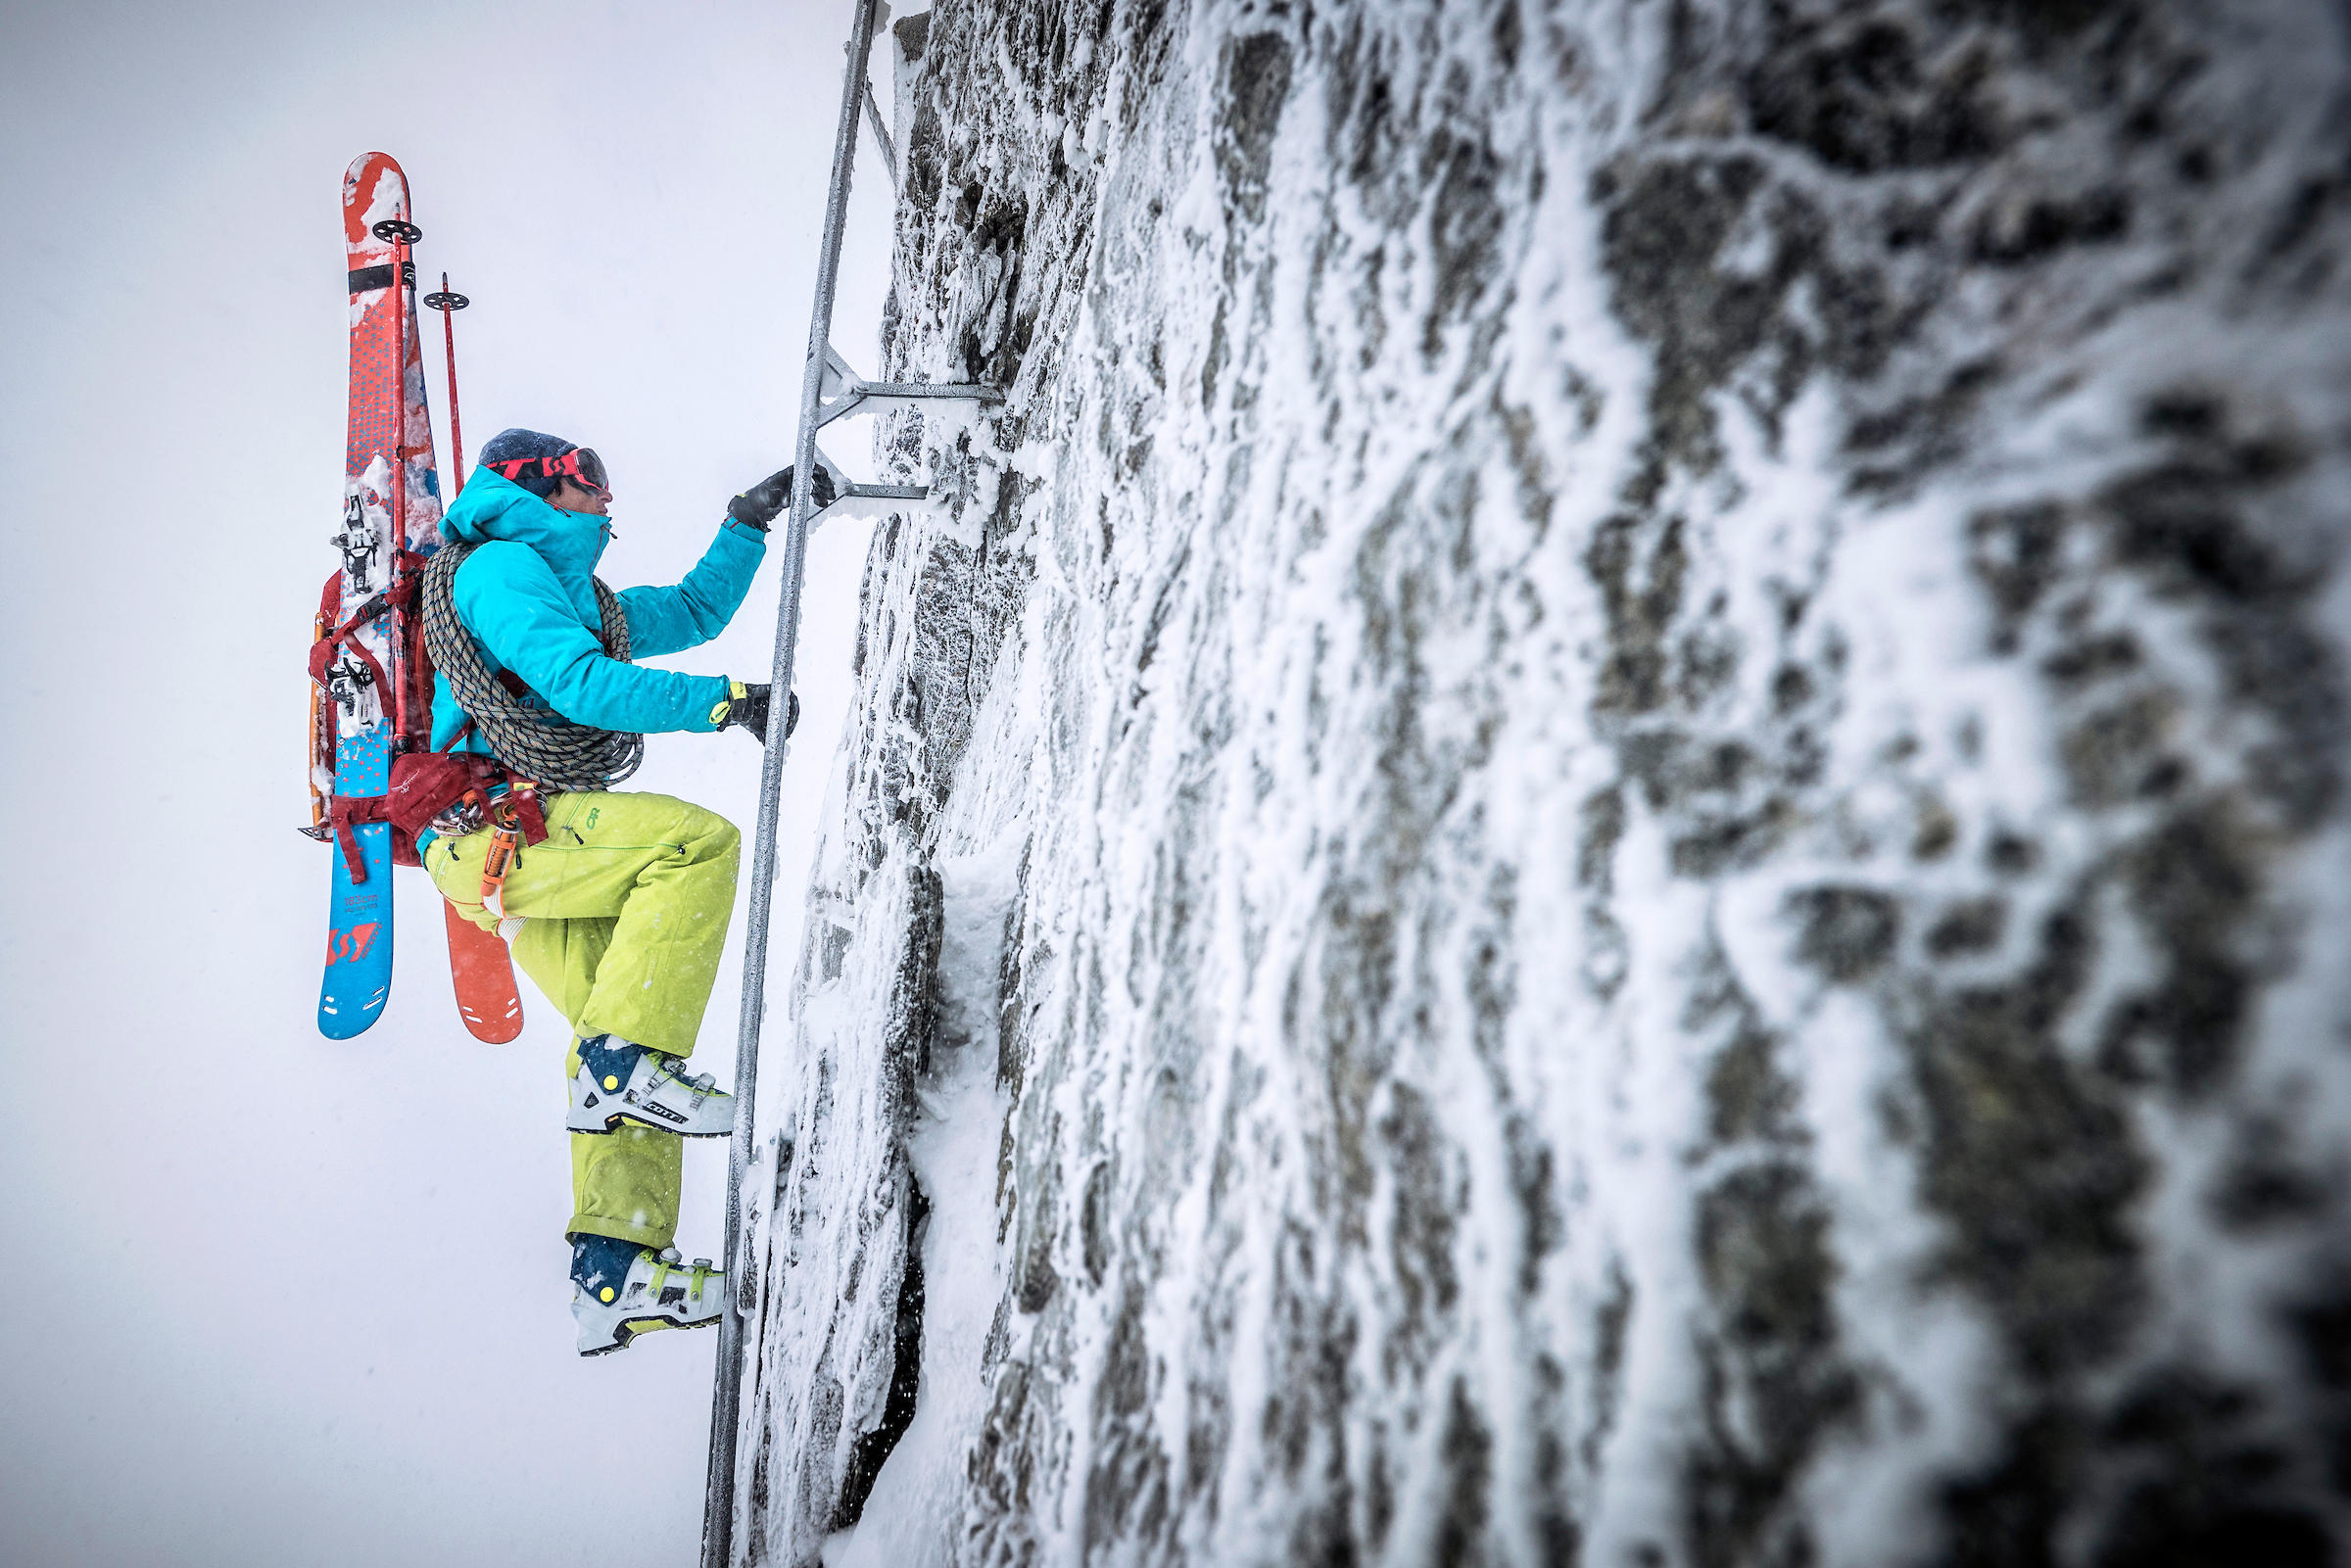 skier climbing a ladder on a snowy rock face